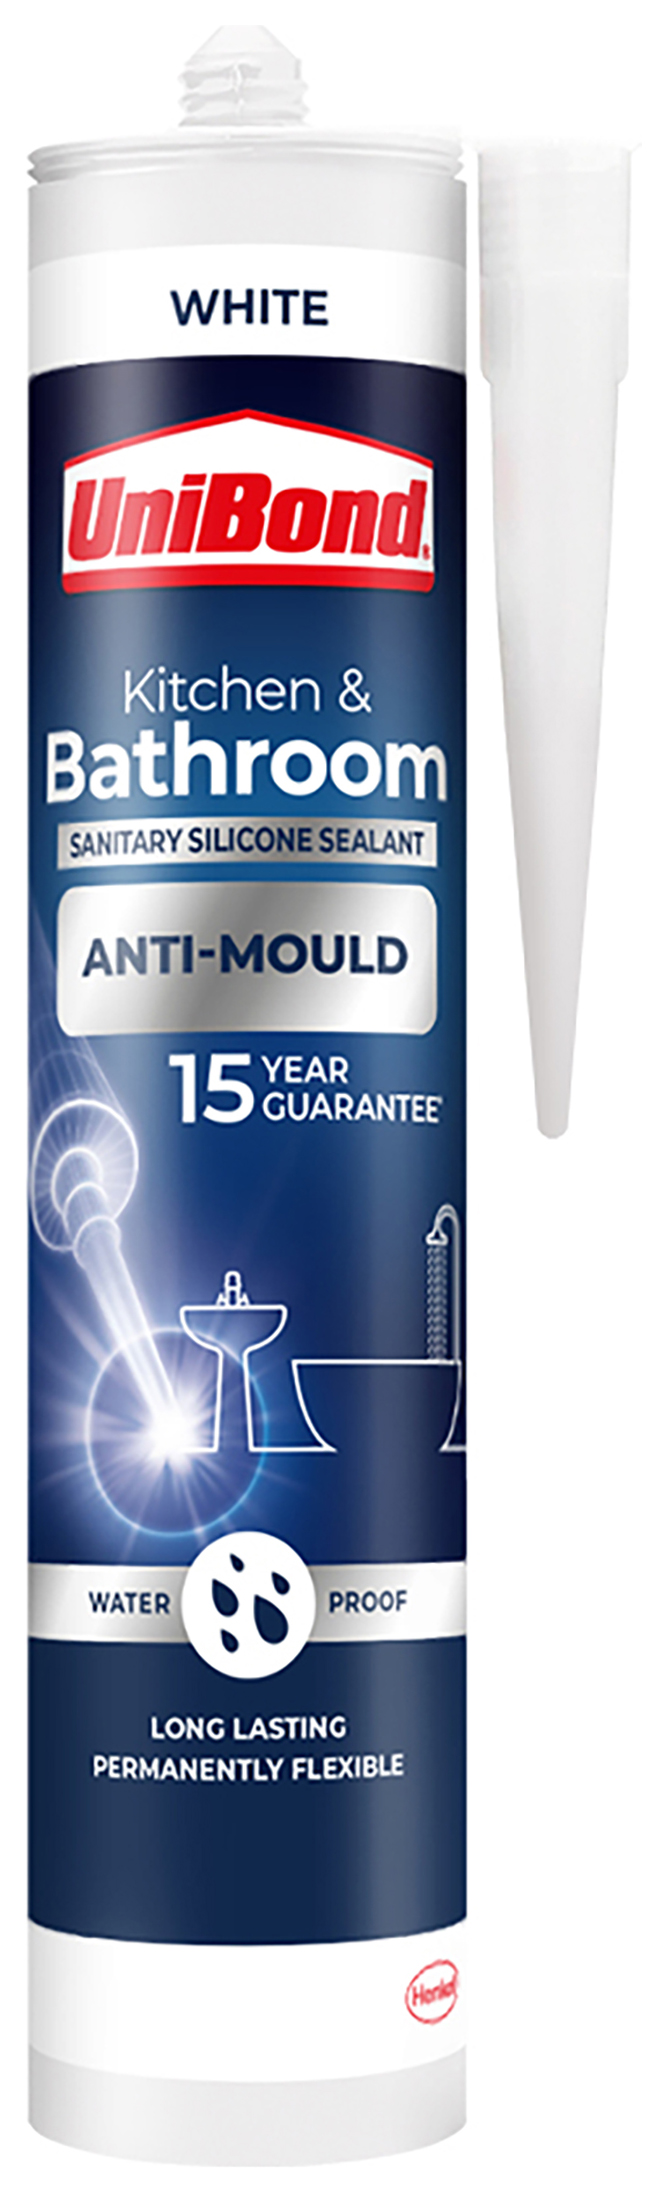 Image of UniBond Anti-Mould Kitchen & Bathroom Sealant - White - 274g